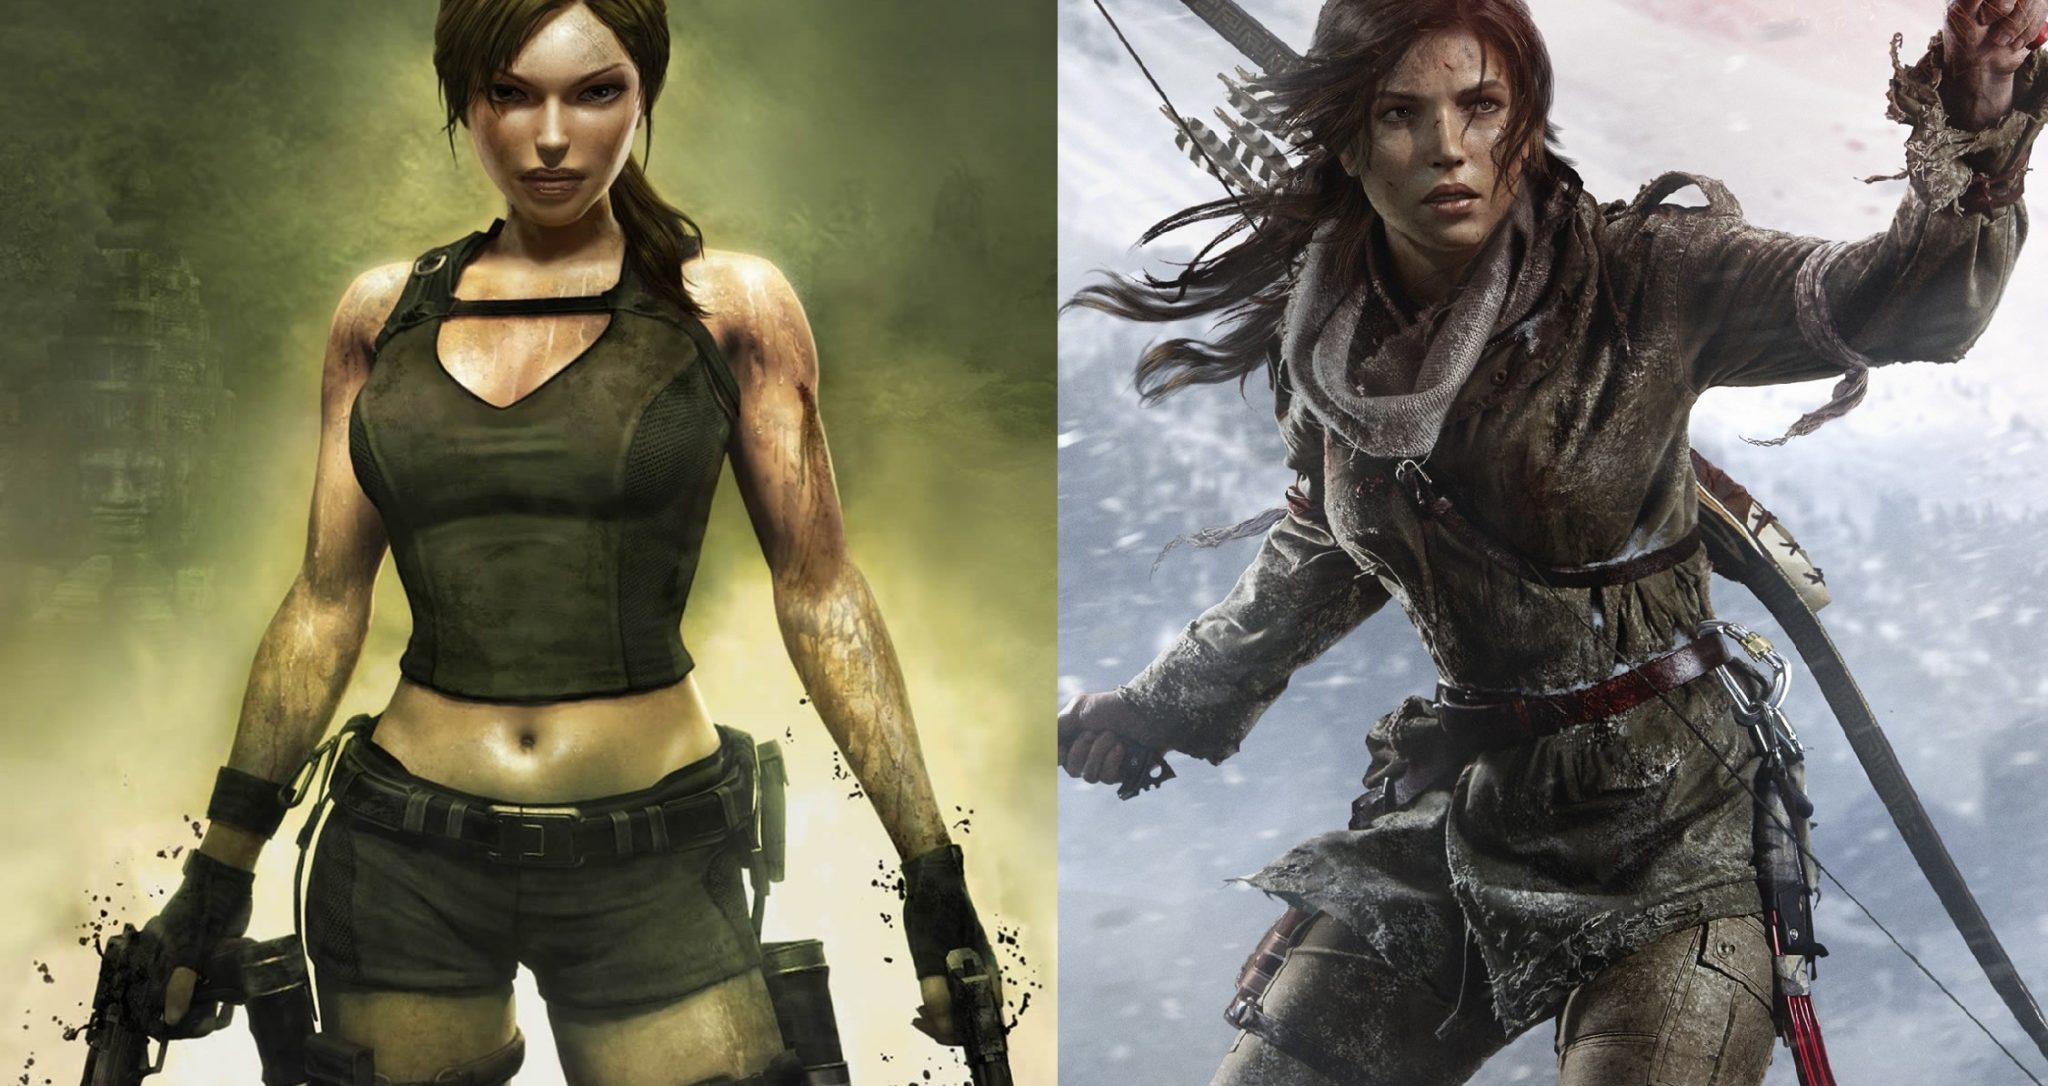 Lara Croft is not Tomb Raider